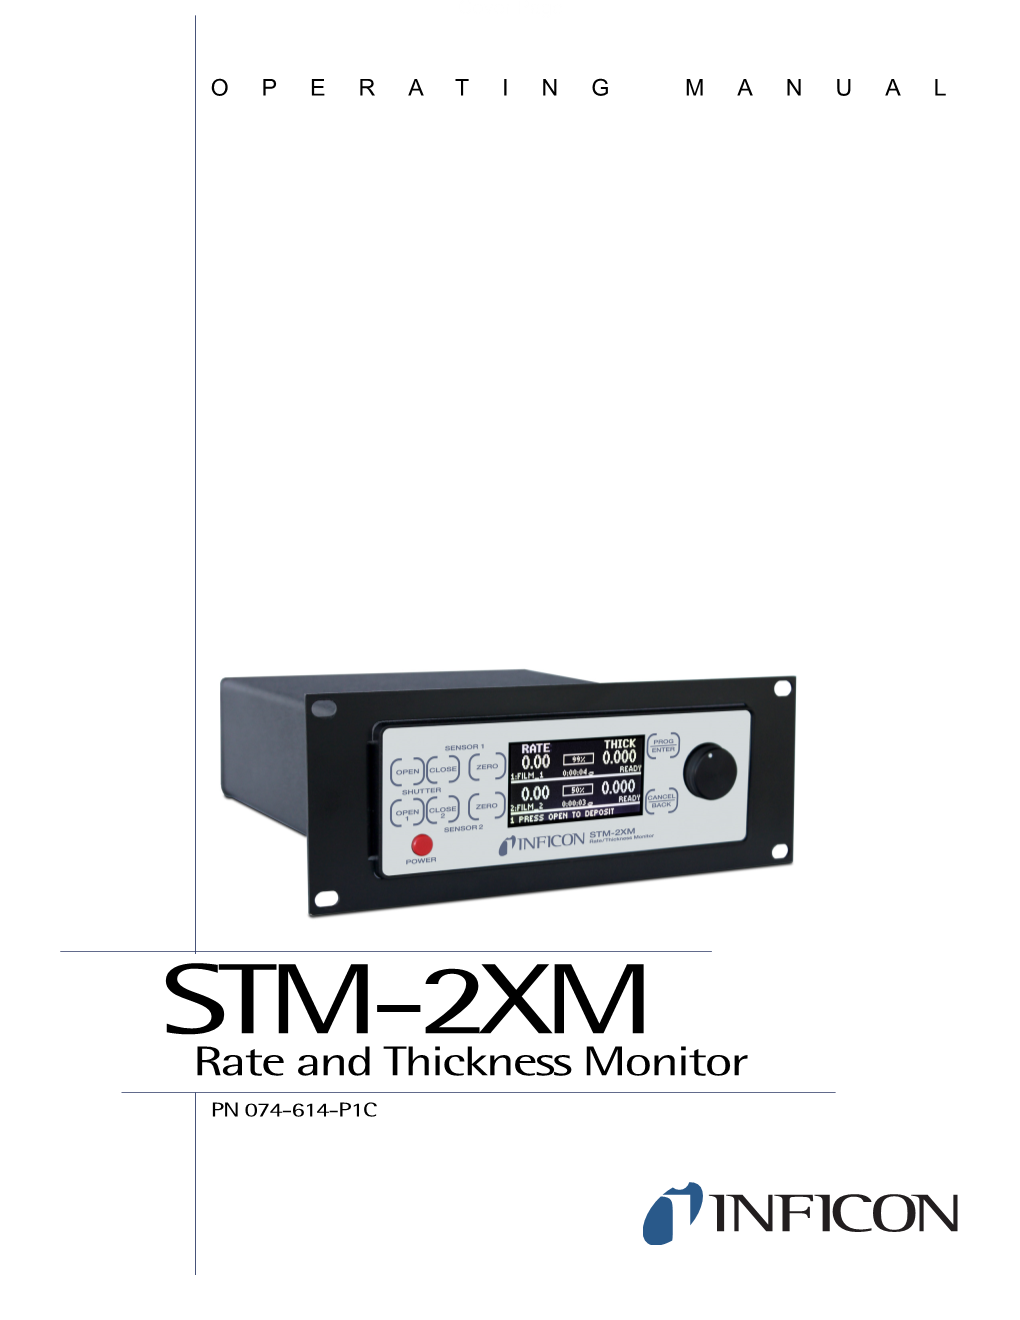 074-614-P1C STM-2XM Operating Manual